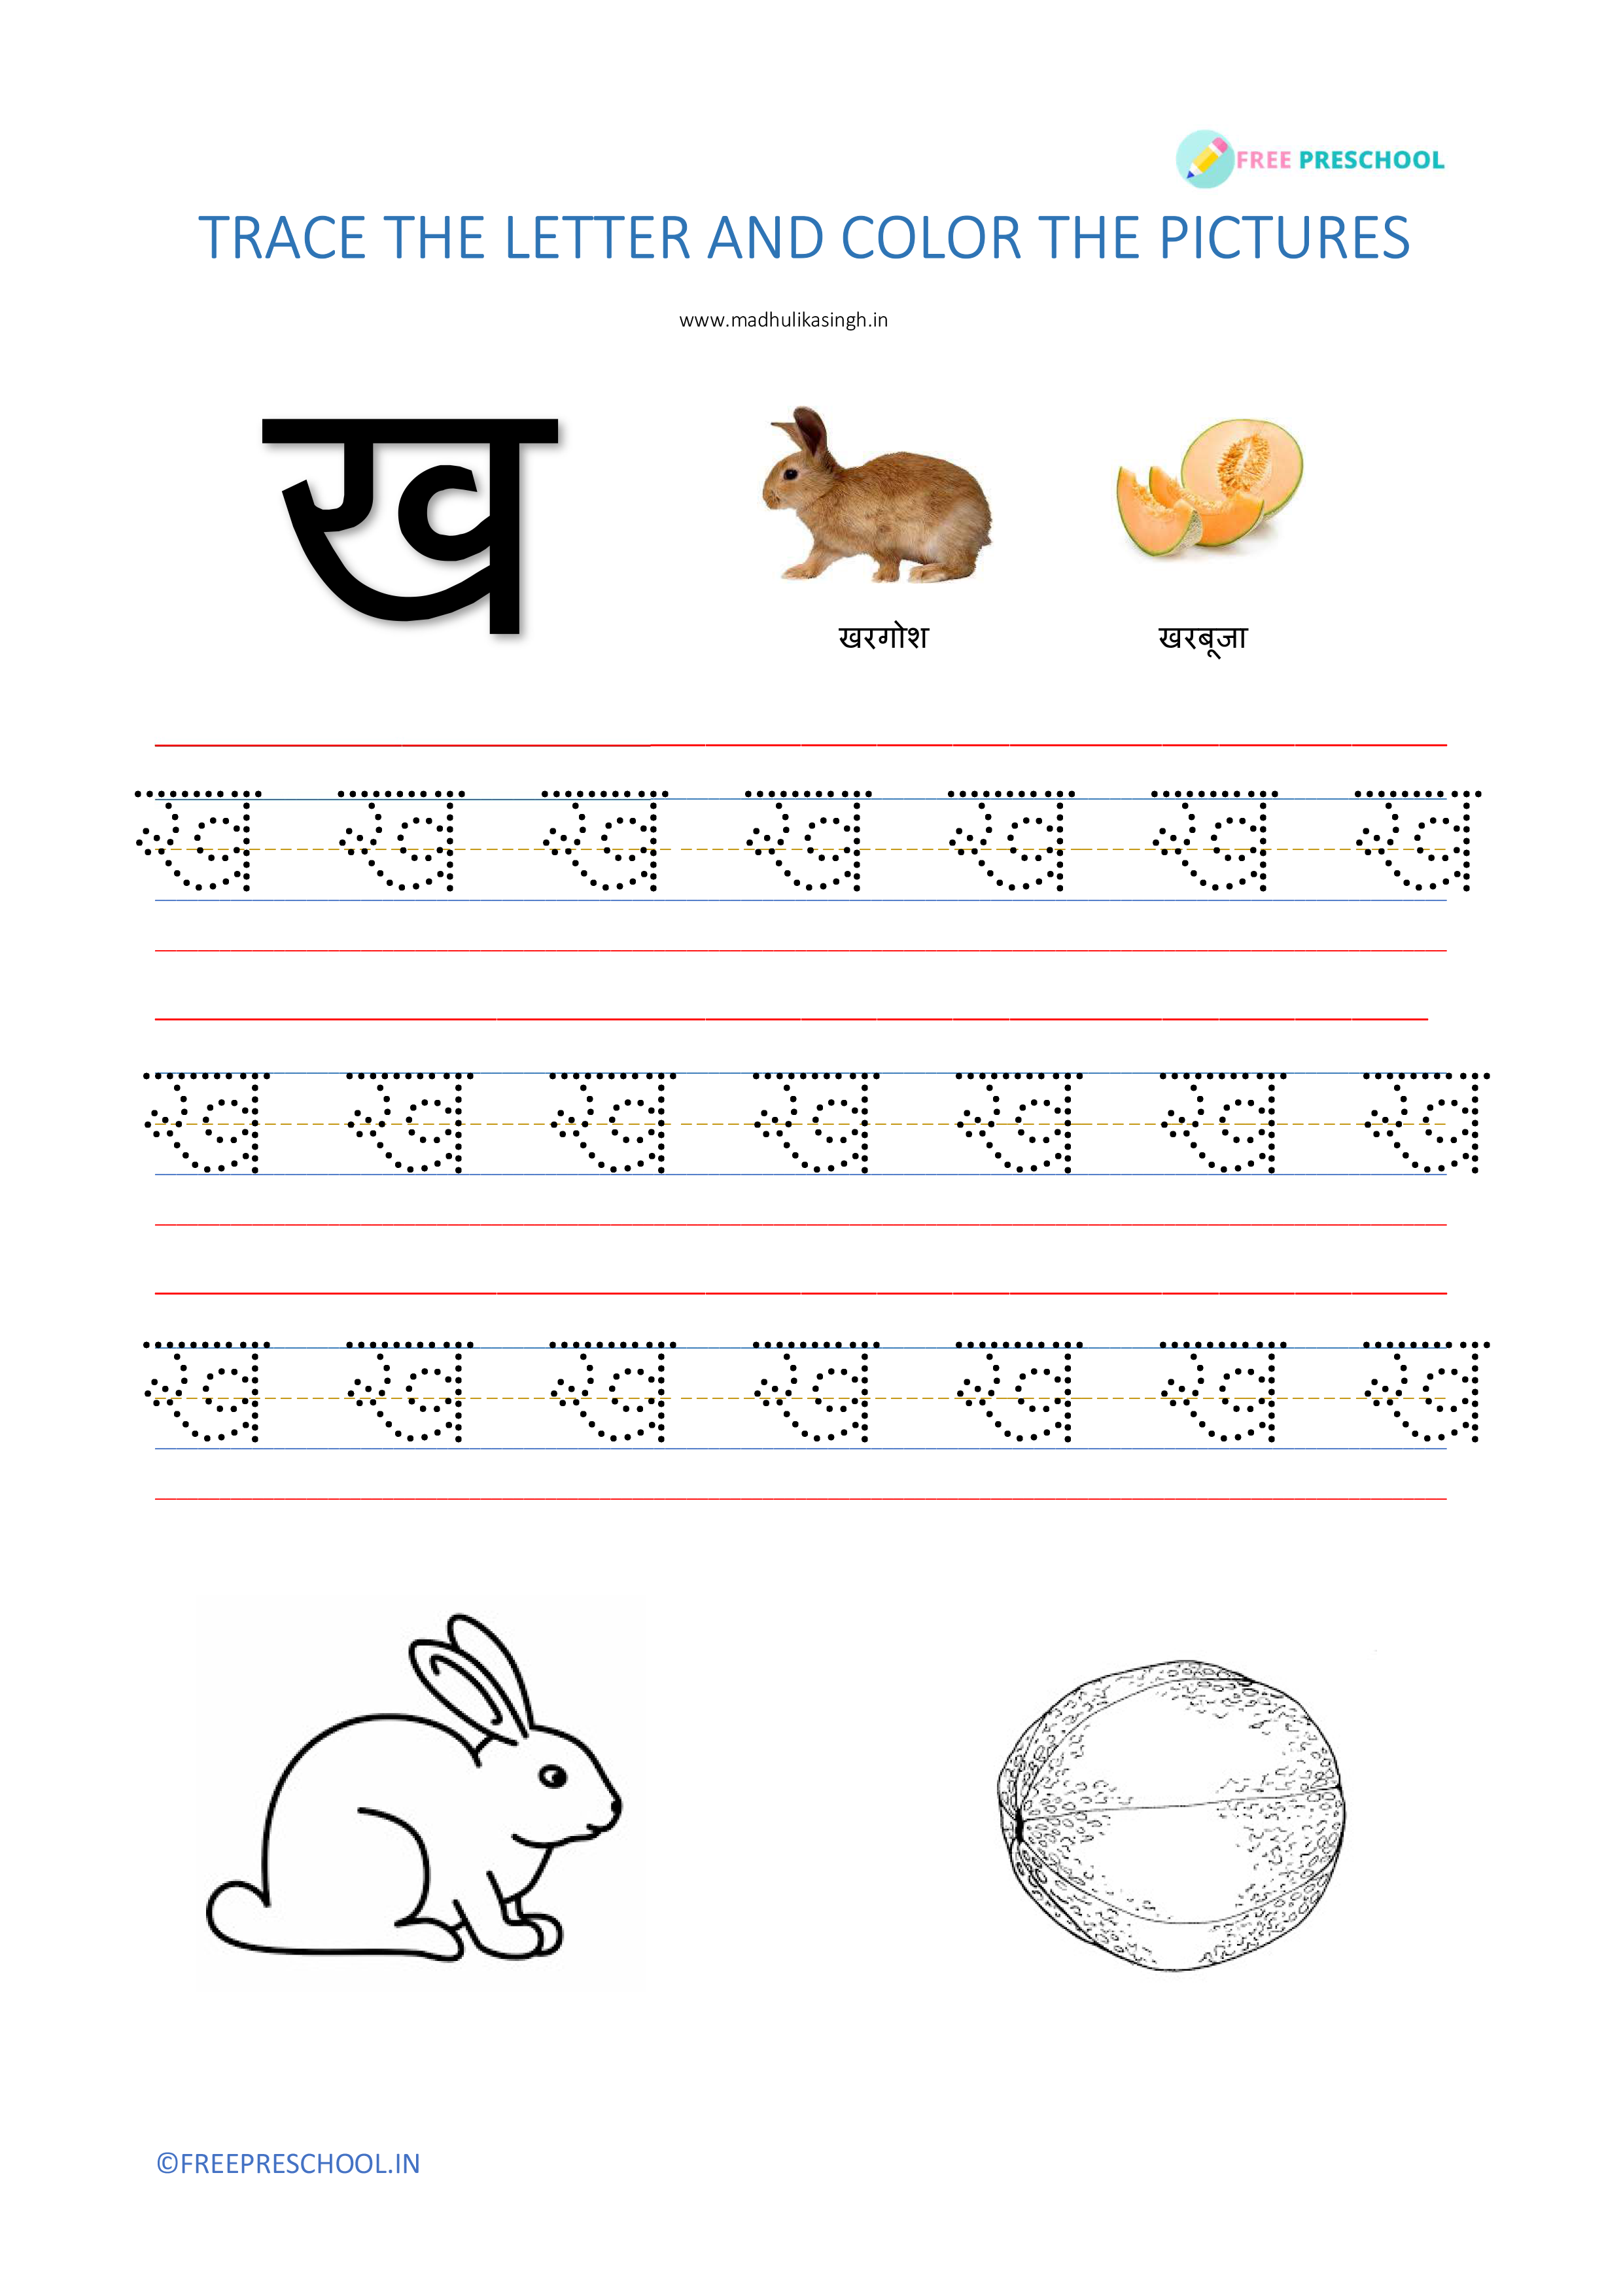 hindi-alphabet-tracing-worksheets-printable-pdf-a-to-jania-tra-se-the